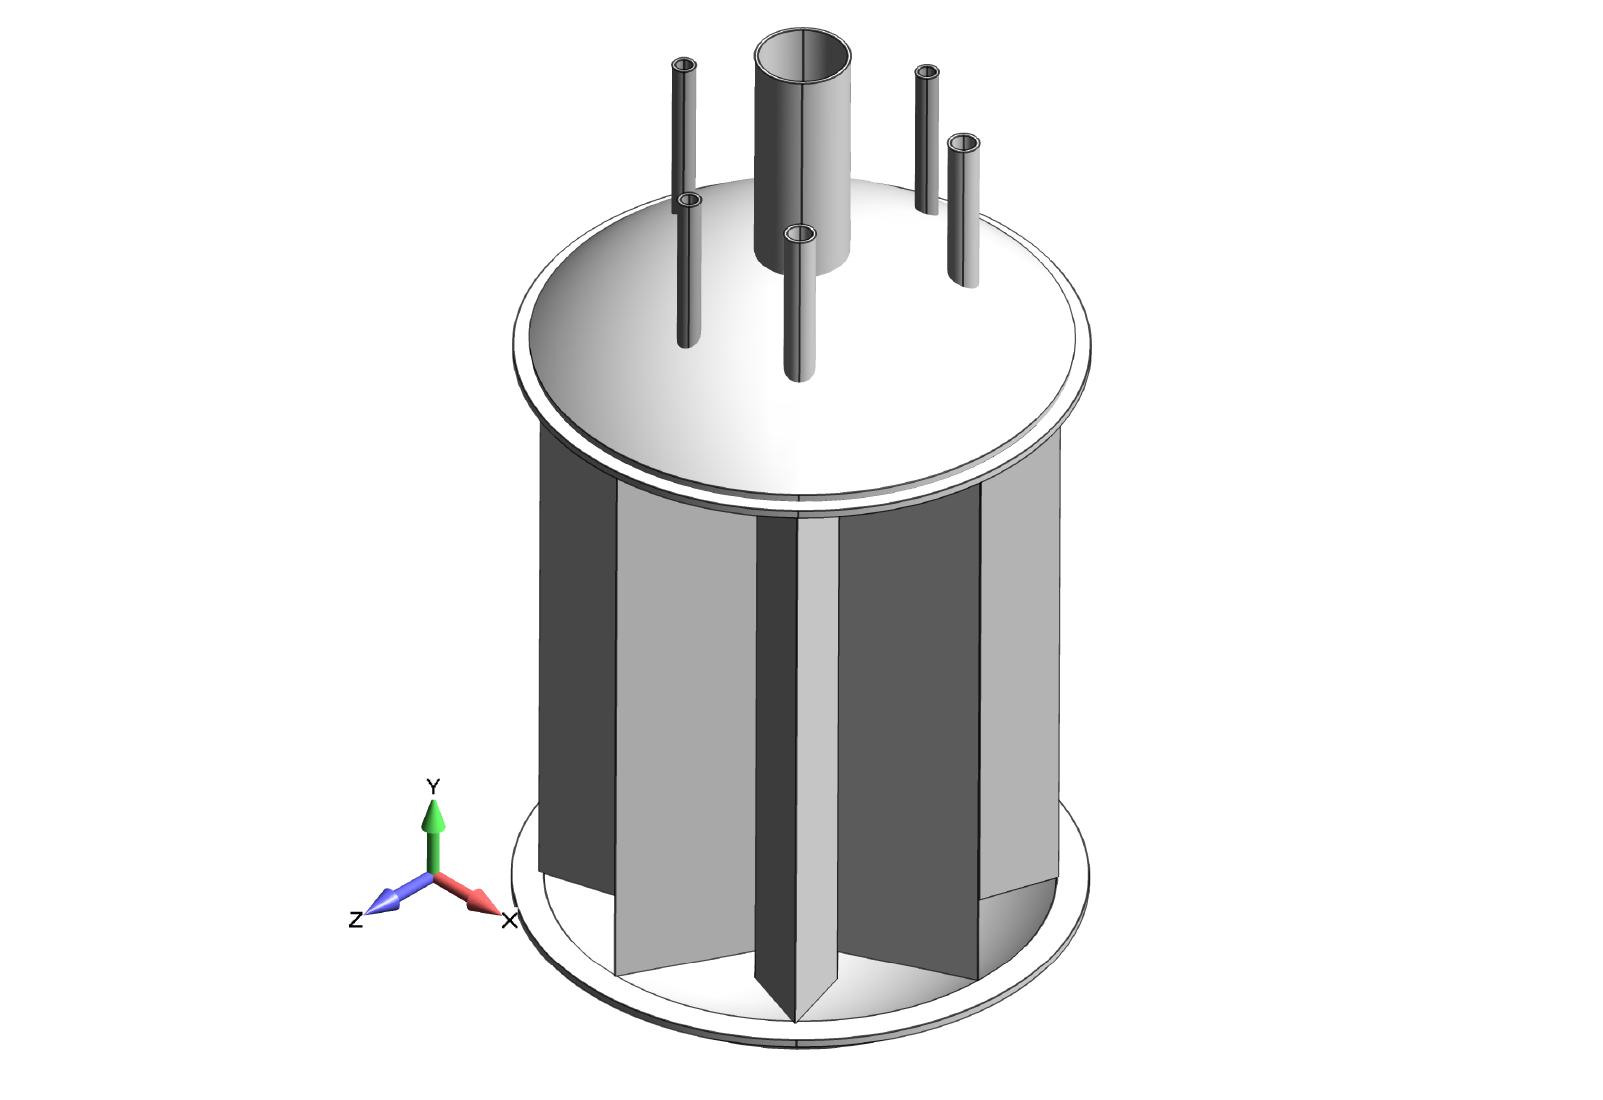 Figure 1: Original cryogenic ASME pressure vessel CAD geometry.